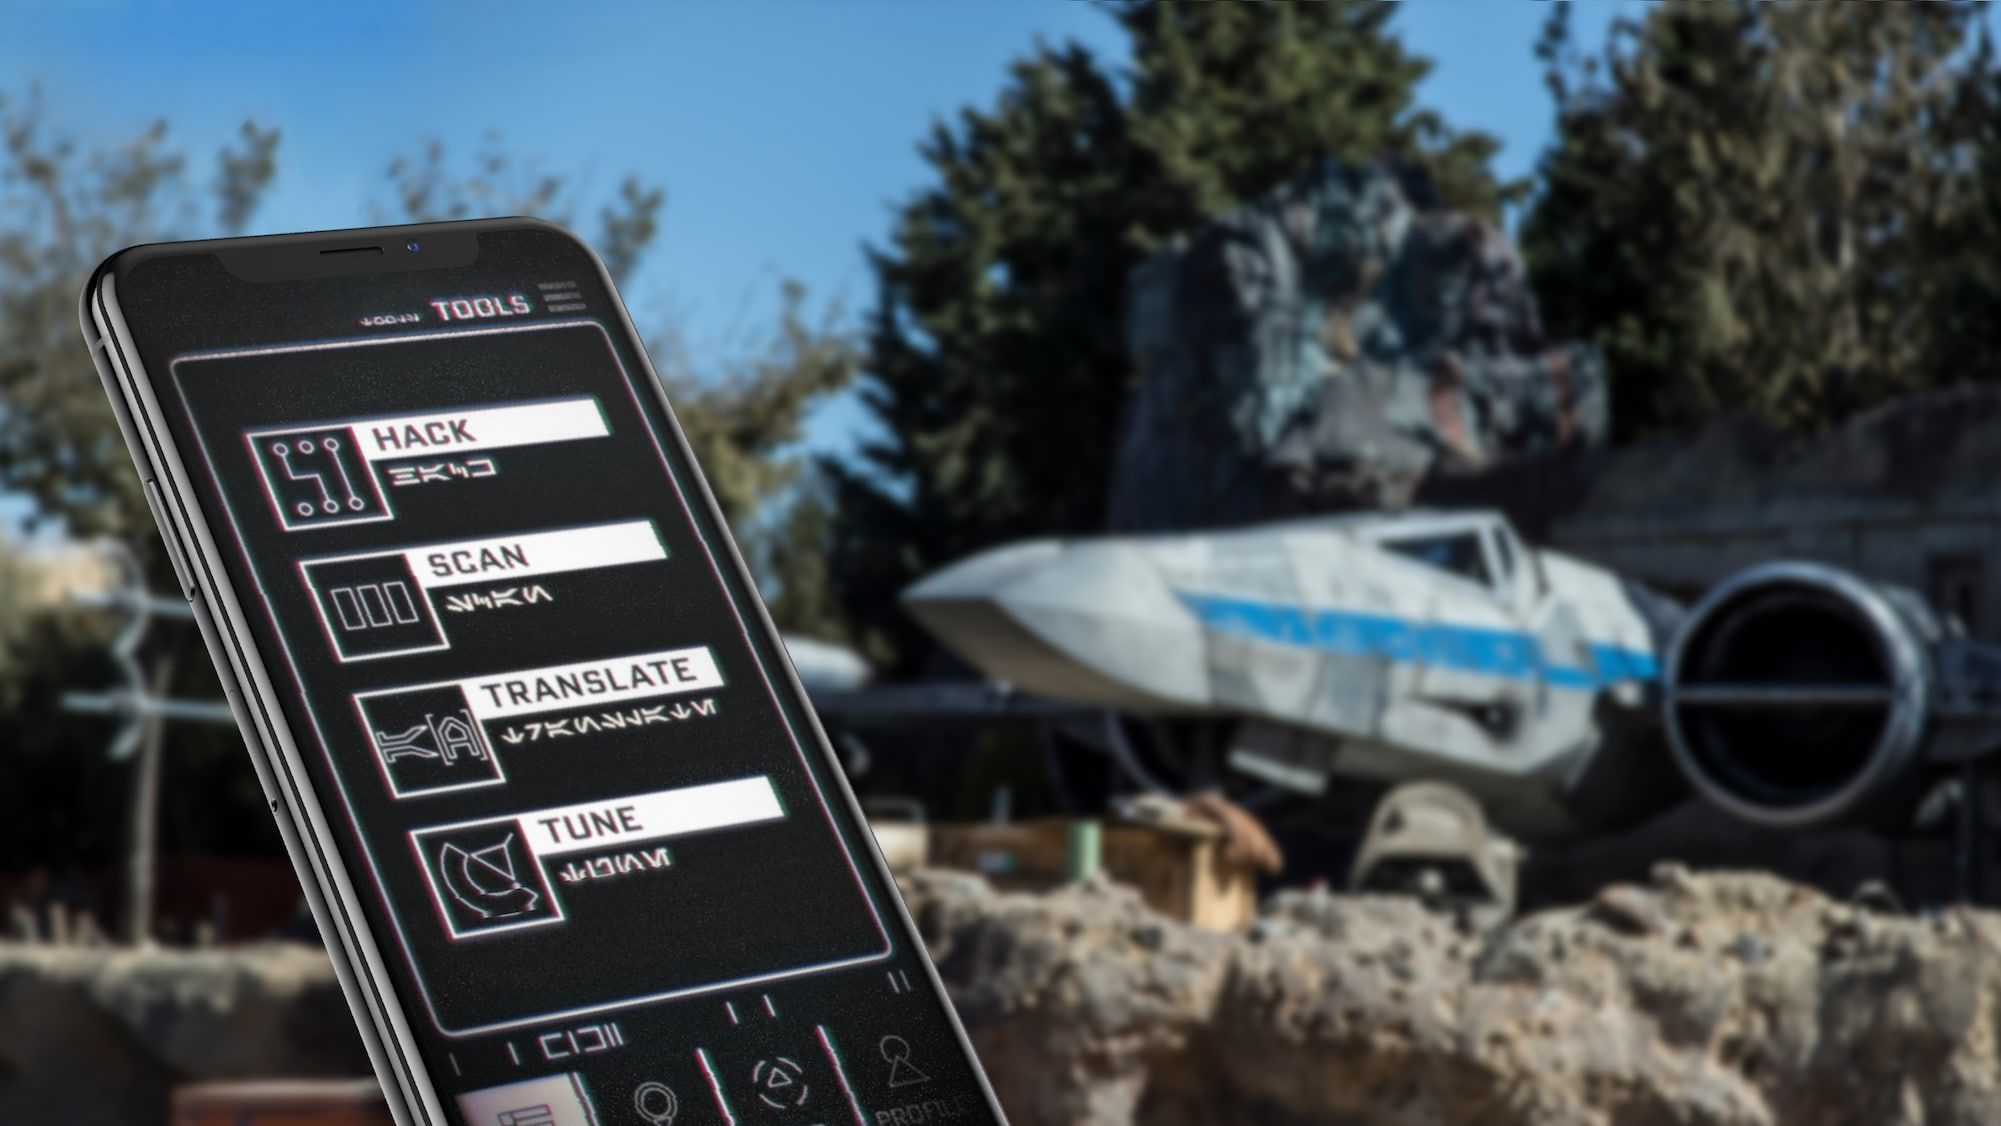 Star Wars Galaxy's Edge Play Disney Parks App